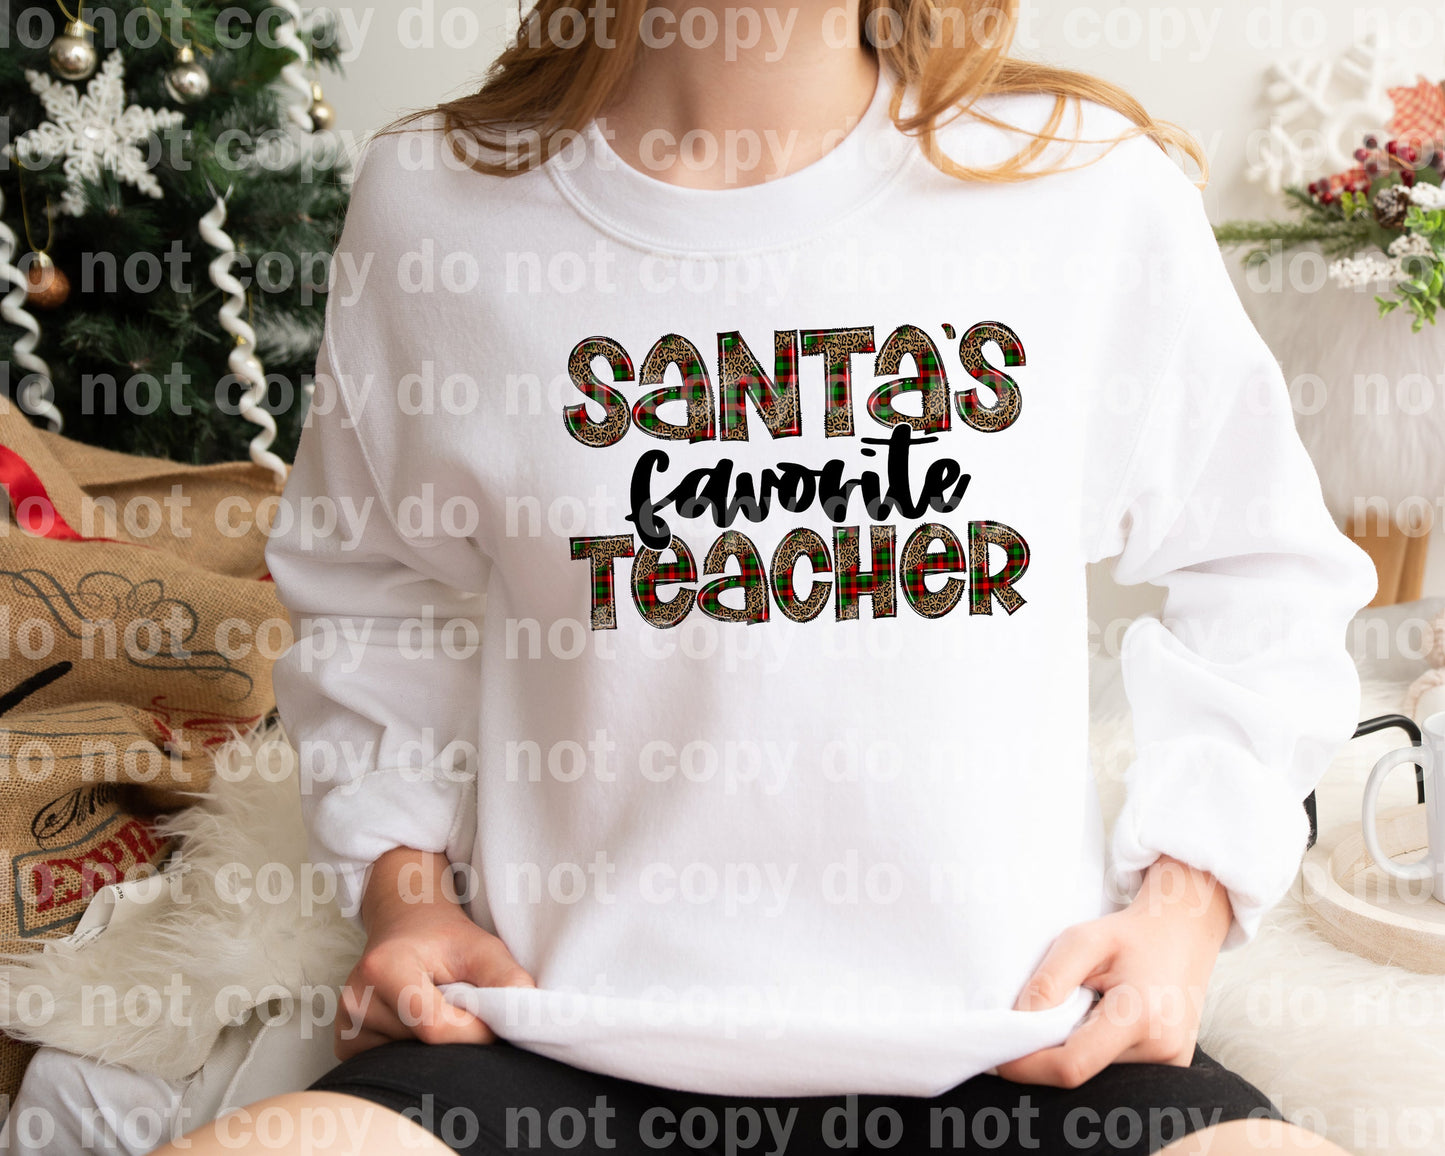 Santa's Favorite Teacher Dream Print or Sublimation Print